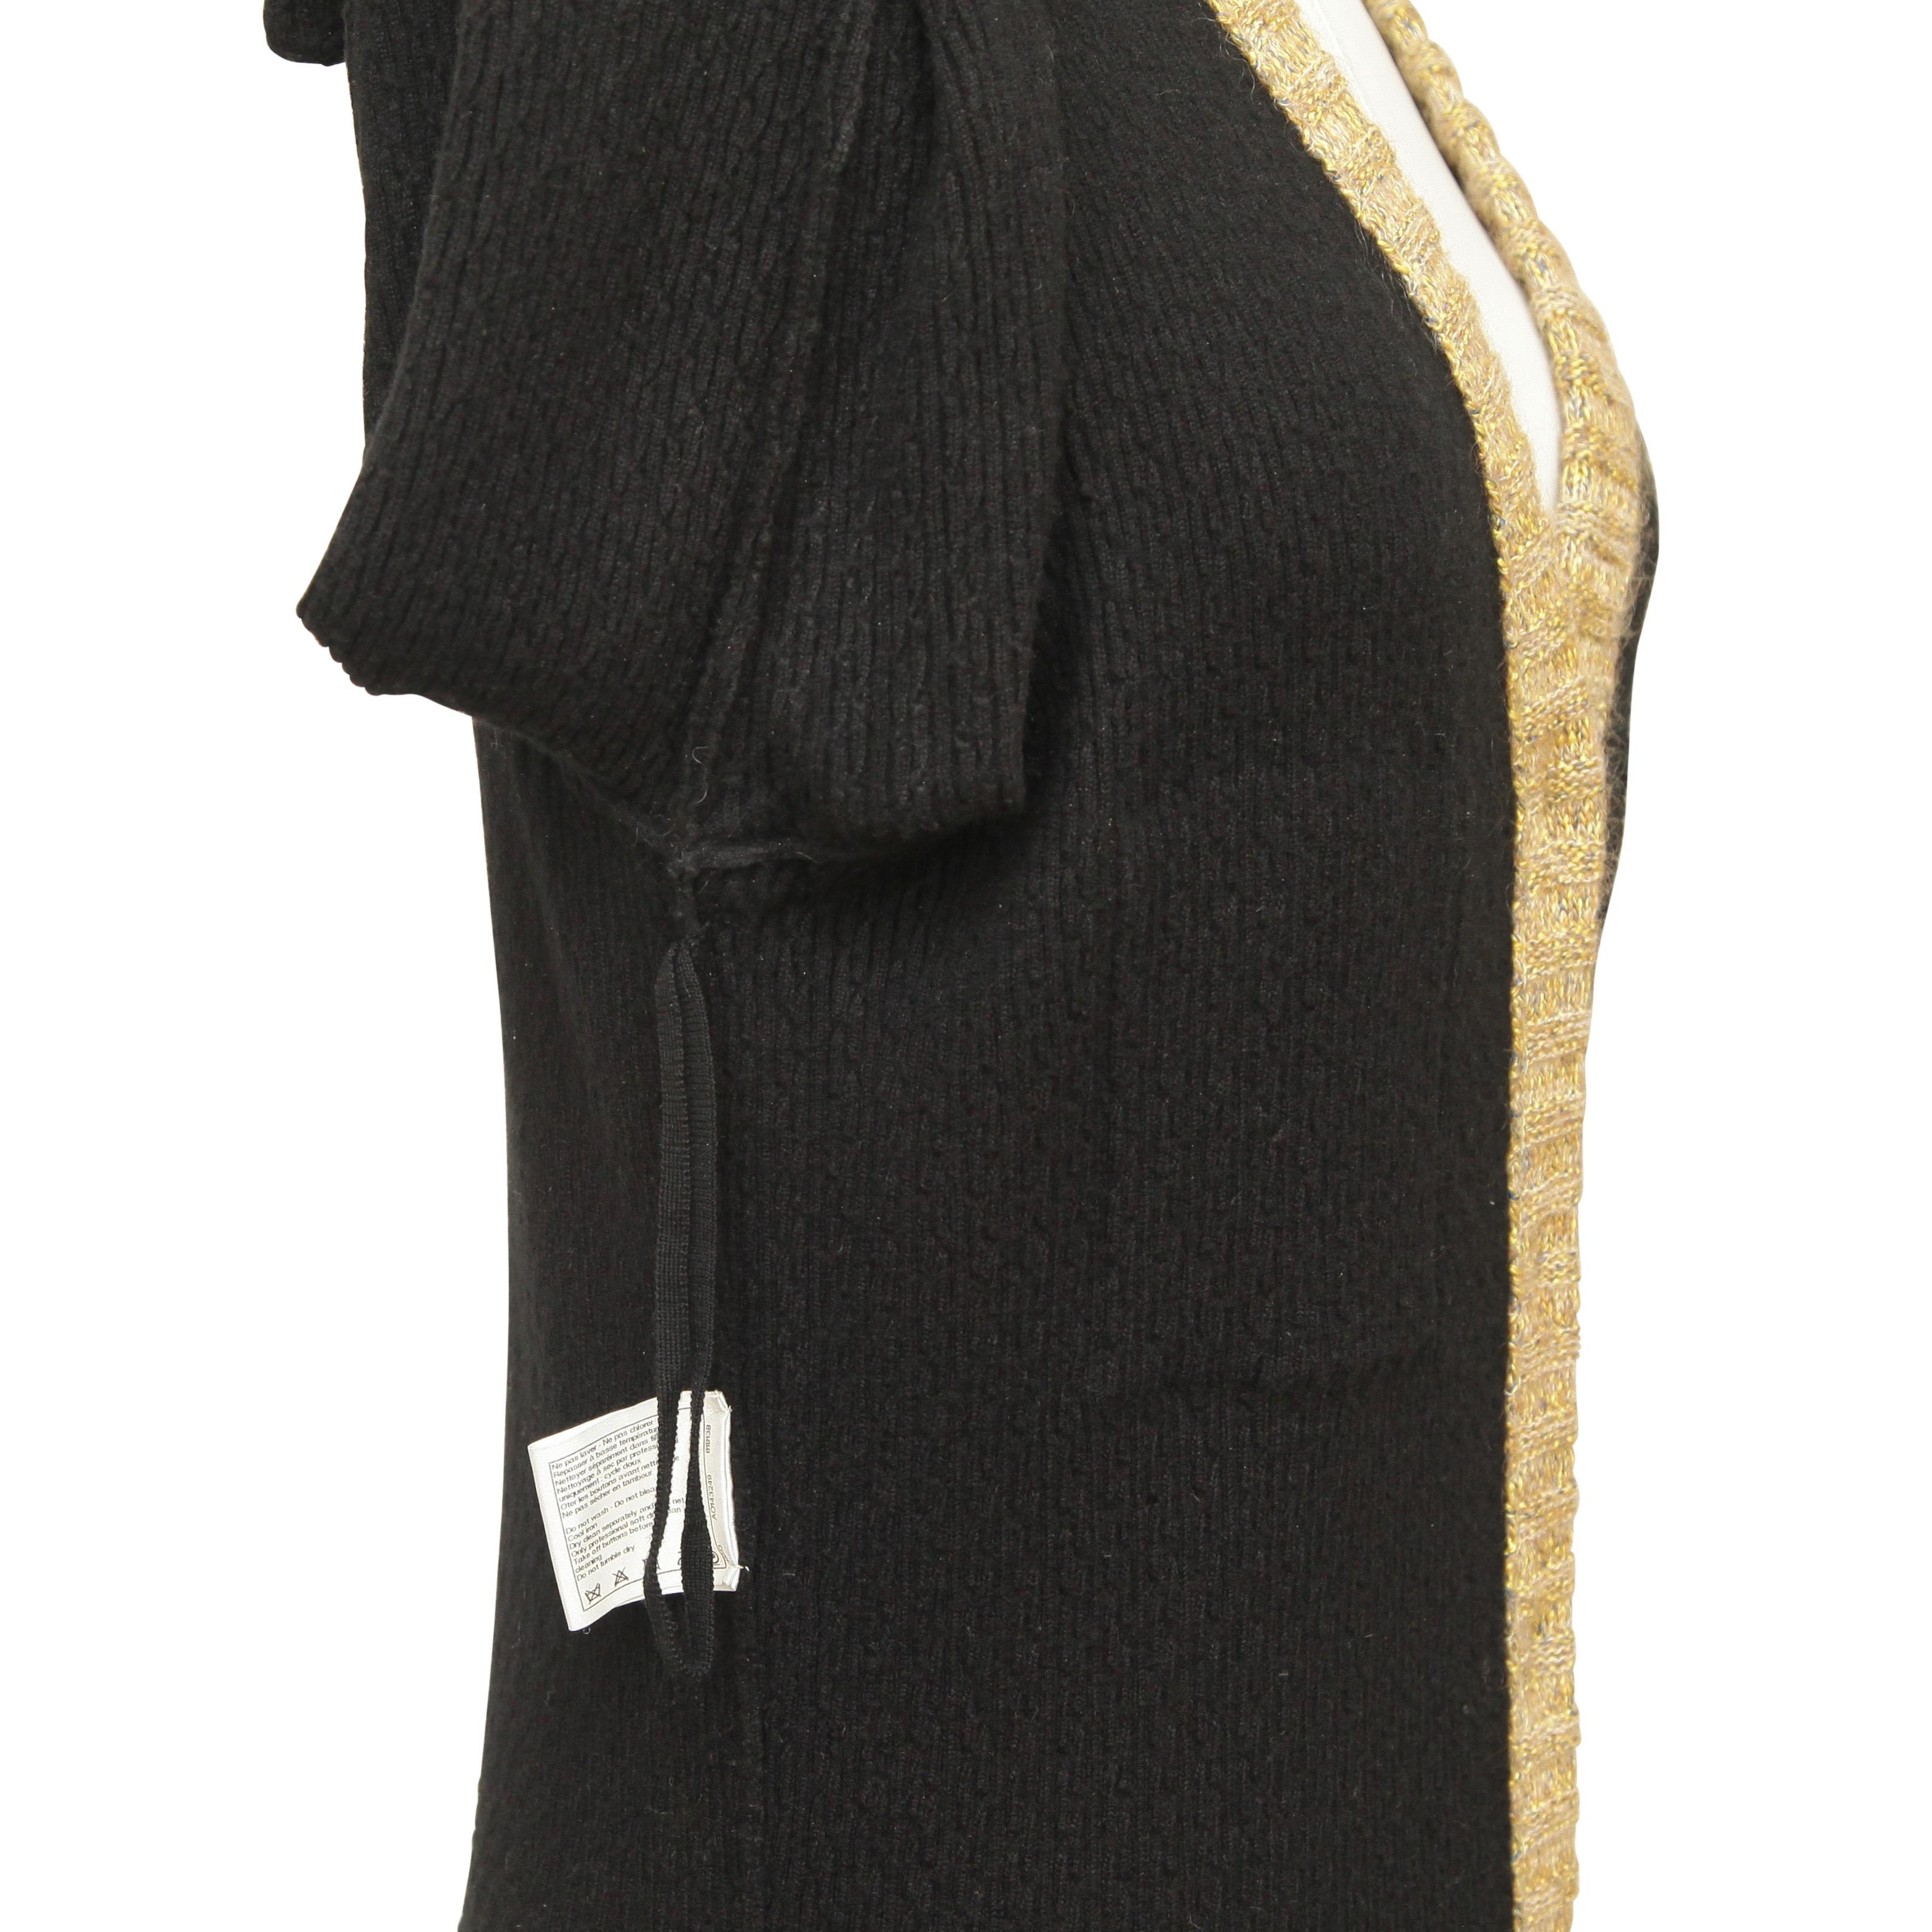 CHANEL Dress Knit Sweater Black Gold Camellia Long Sleeve Cashmere Sz 42 2015 4